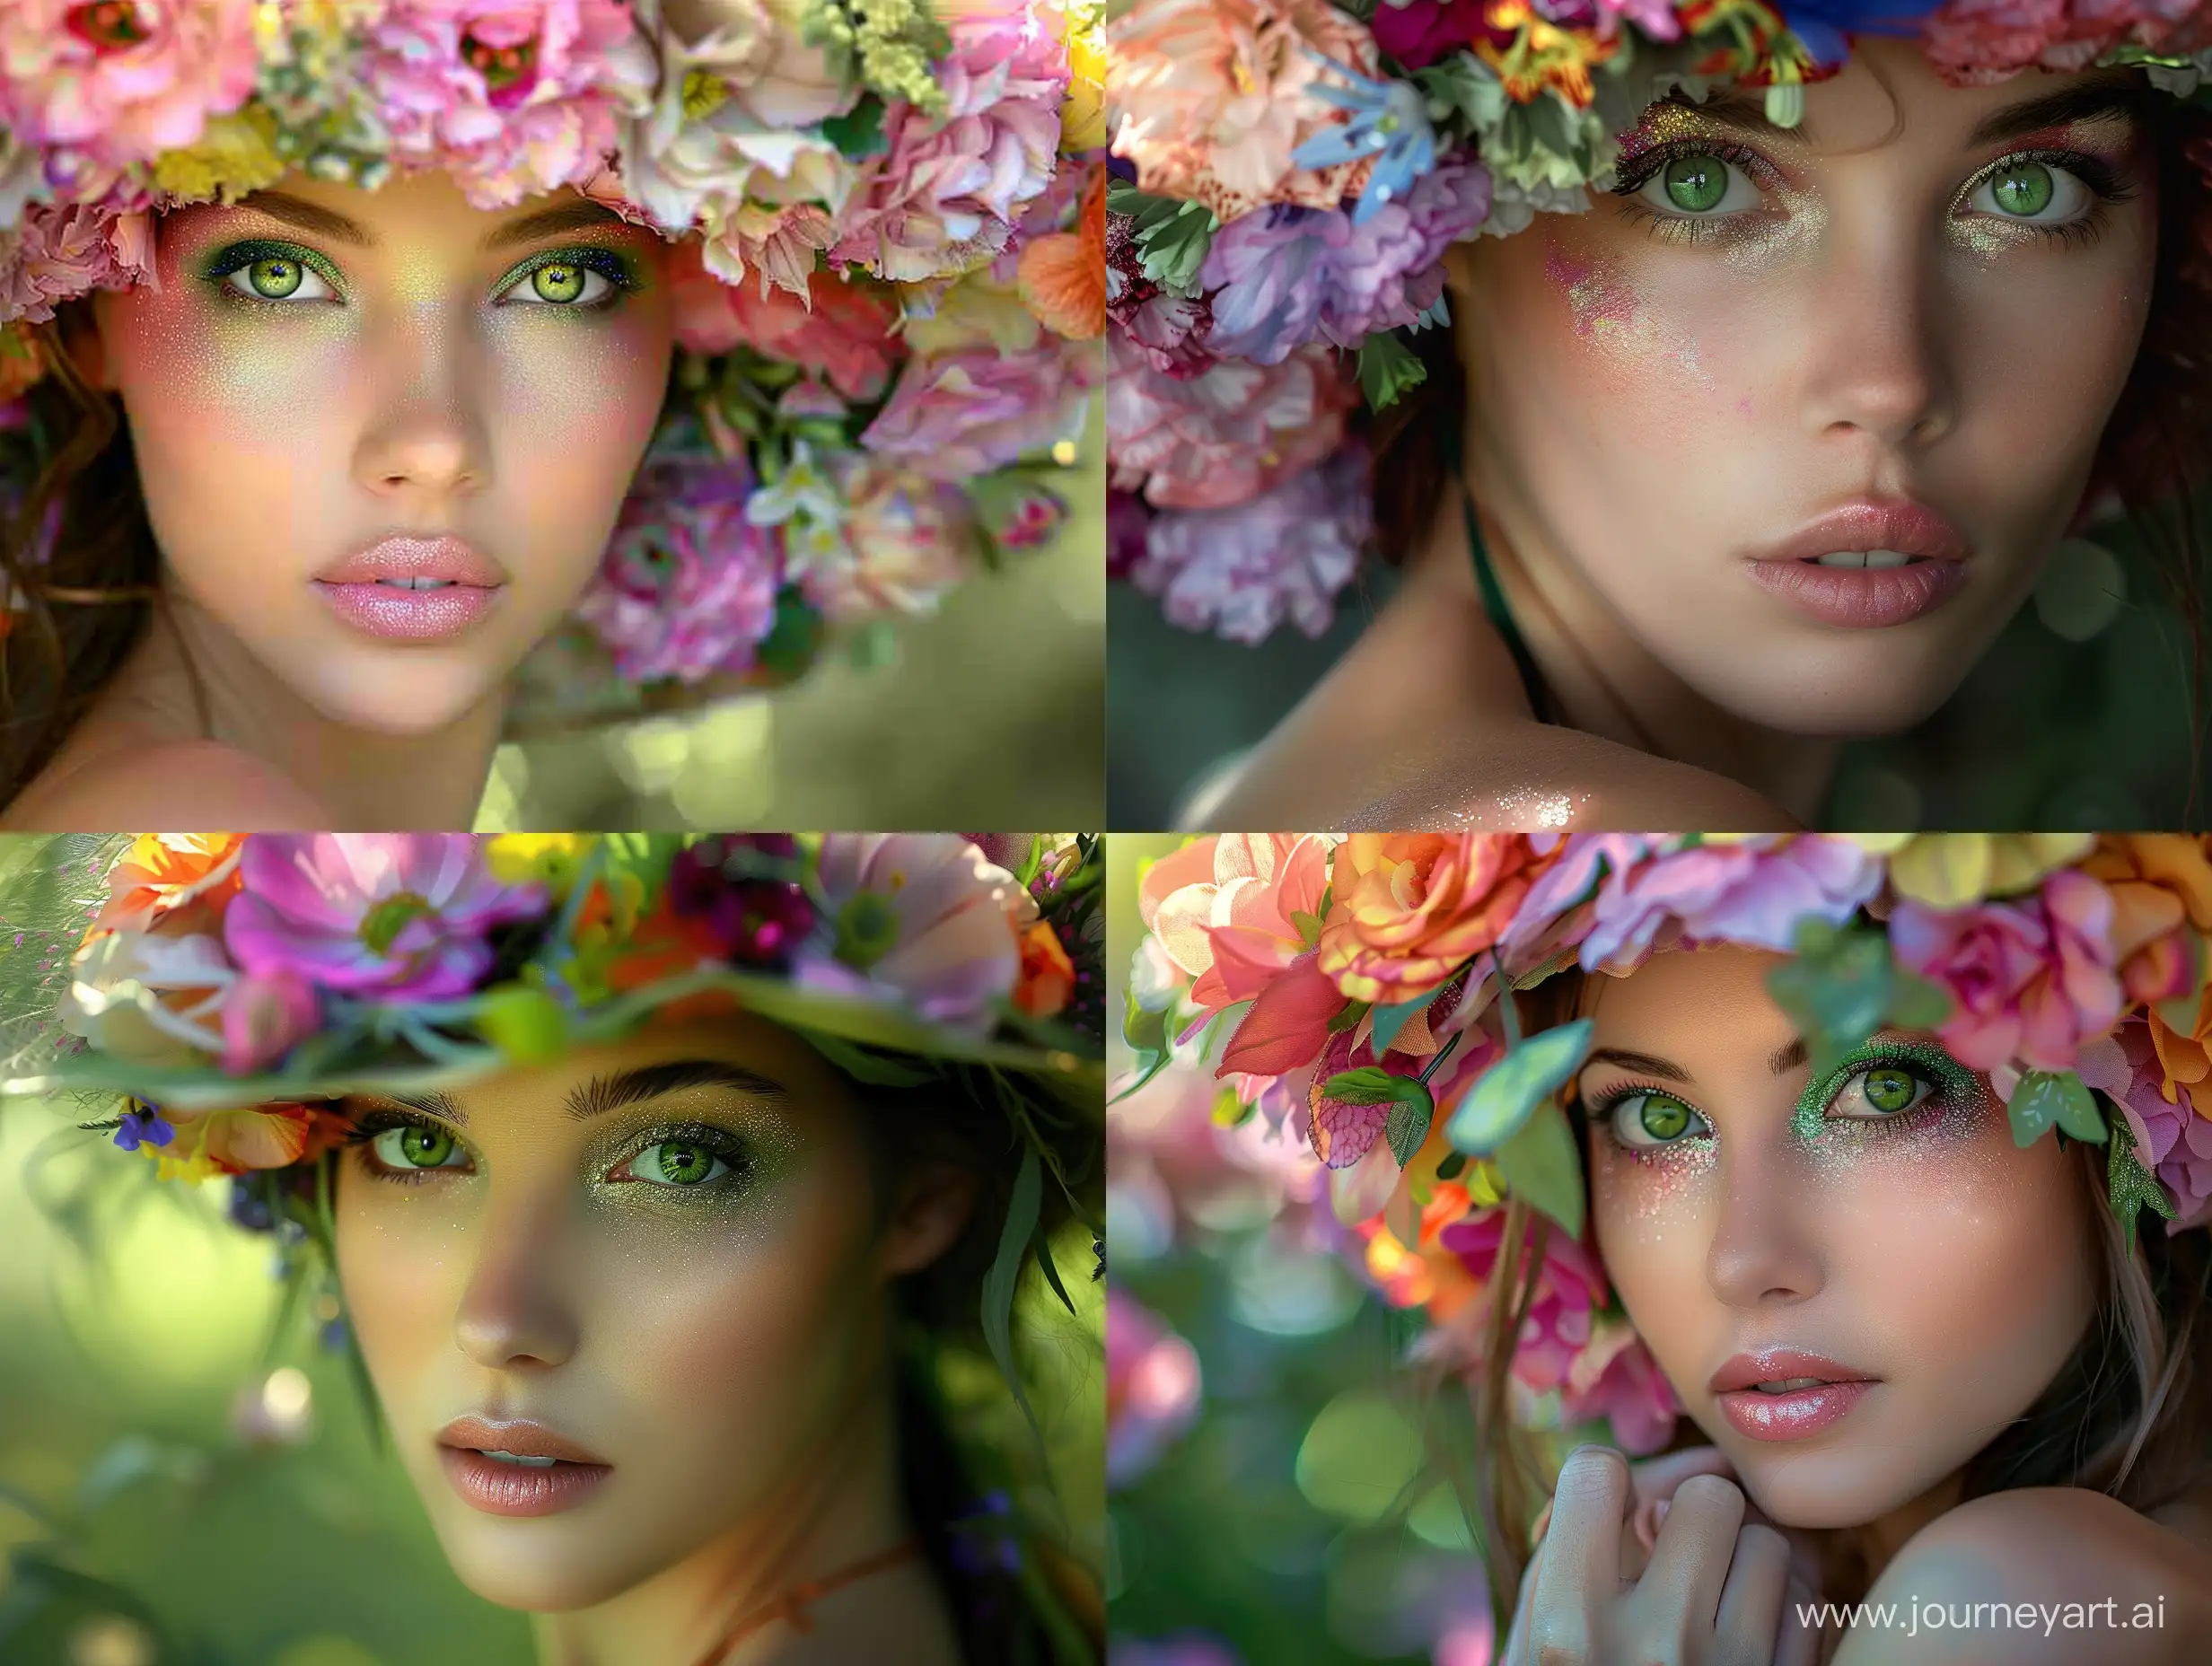 Elegant-Woman-with-Green-Eyes-Wearing-Flower-Hat